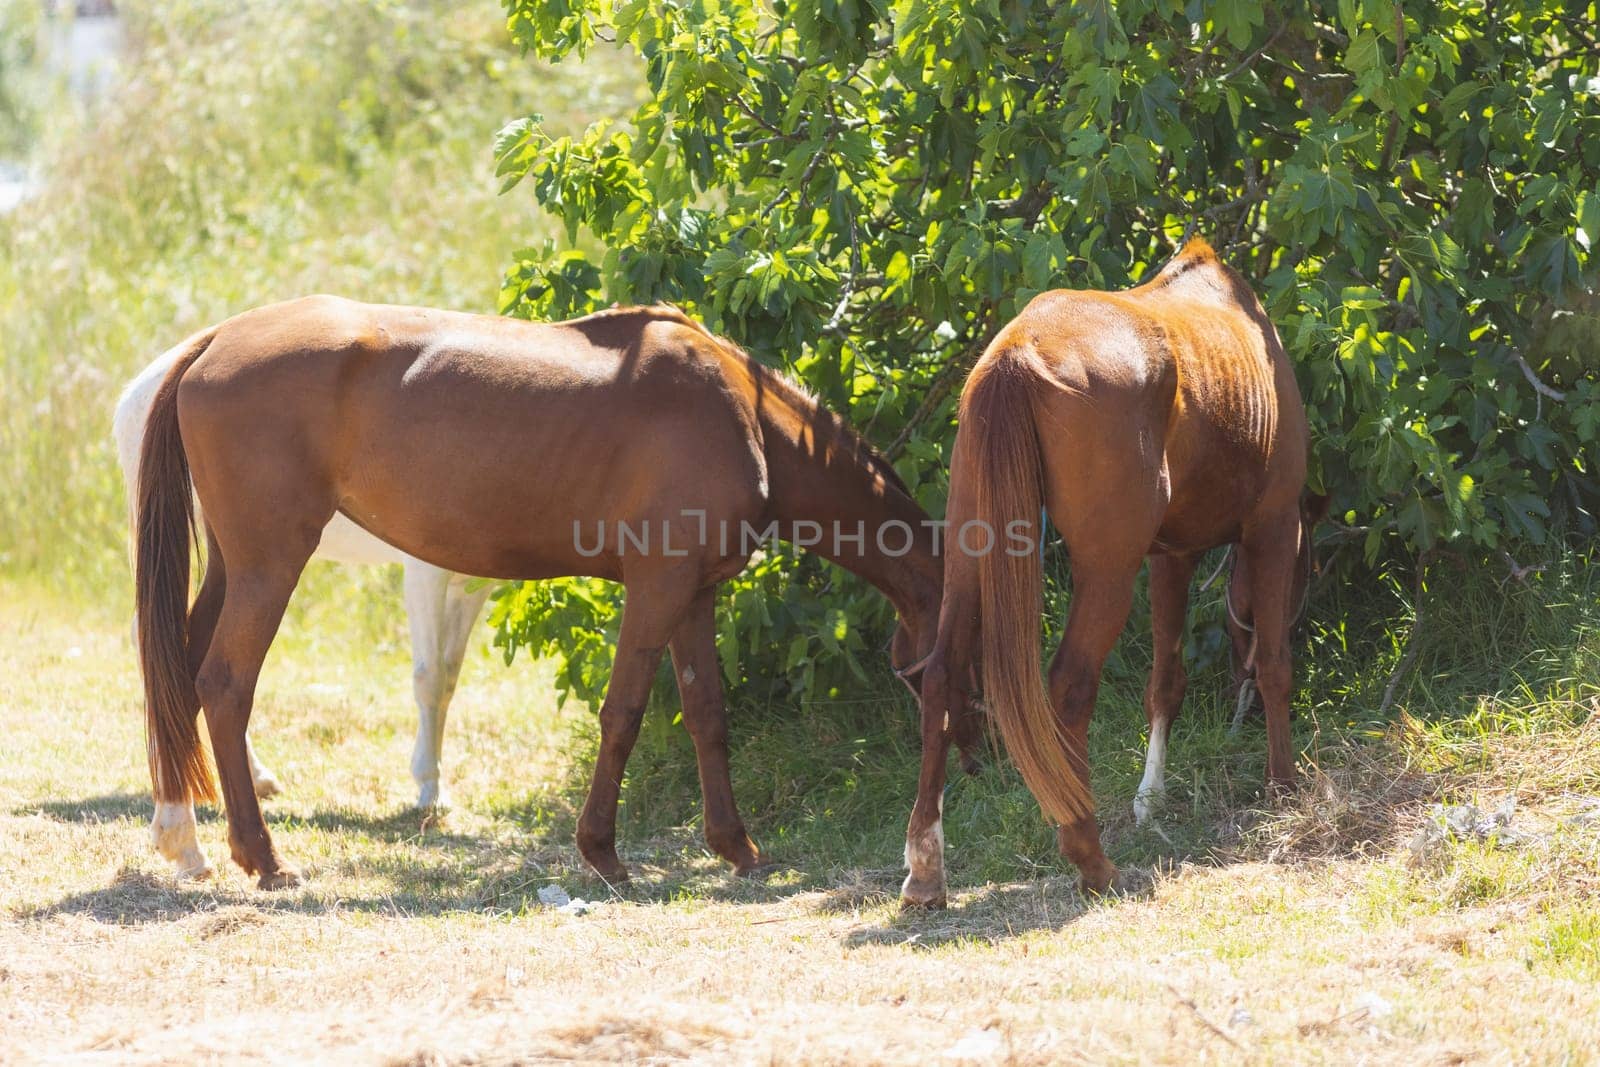 Brown horses grazing outdoors near a bush. Mid shot